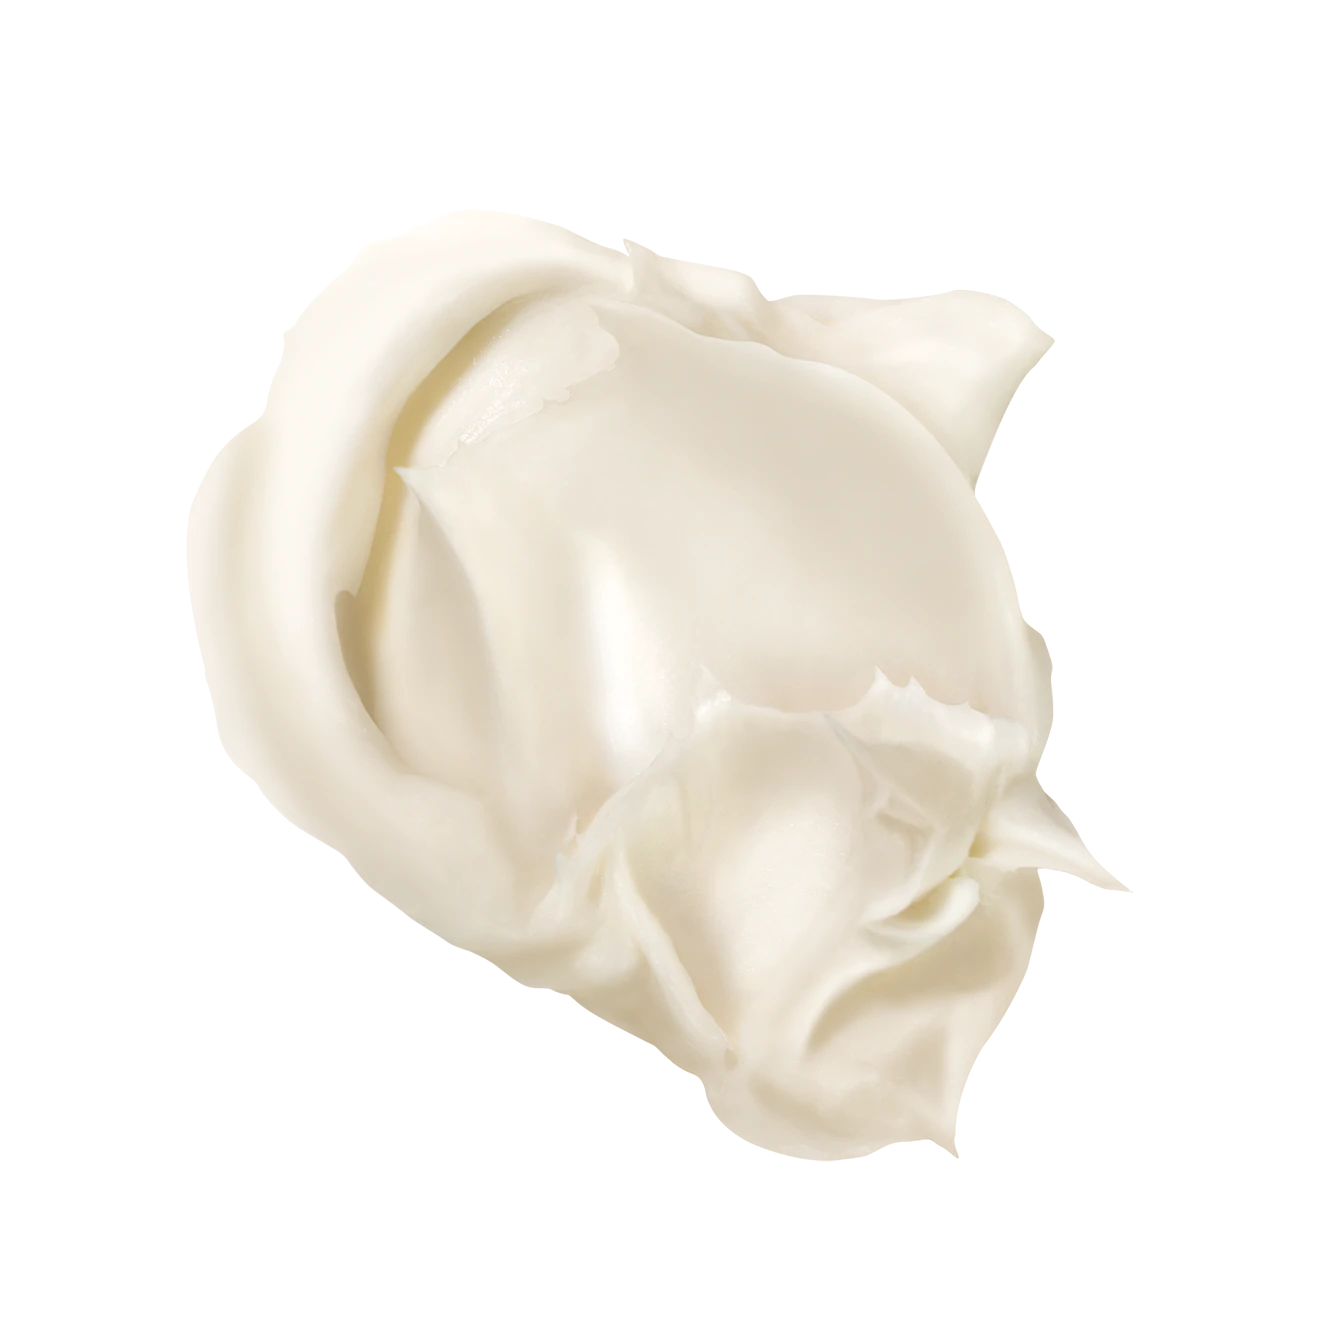  Drunk Elephant Lala Retro Whipped Cream. Replenishing  Moisturizer for Skin Protection and Rejuvenation. 50 Milliliters. : Video  Games